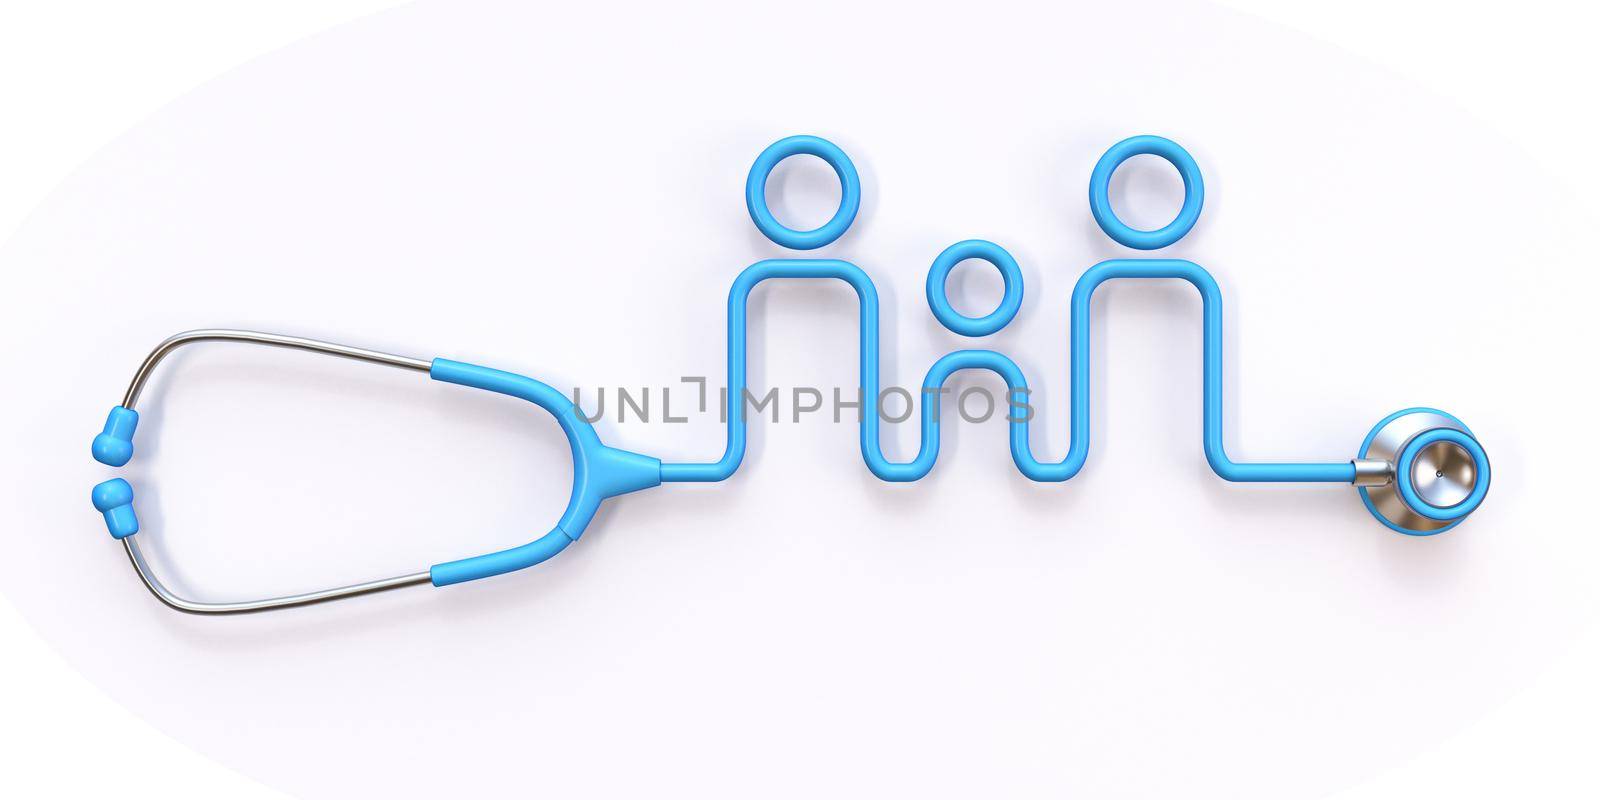 Family shaped stethoscope 3D rendering illustration isolated on white background